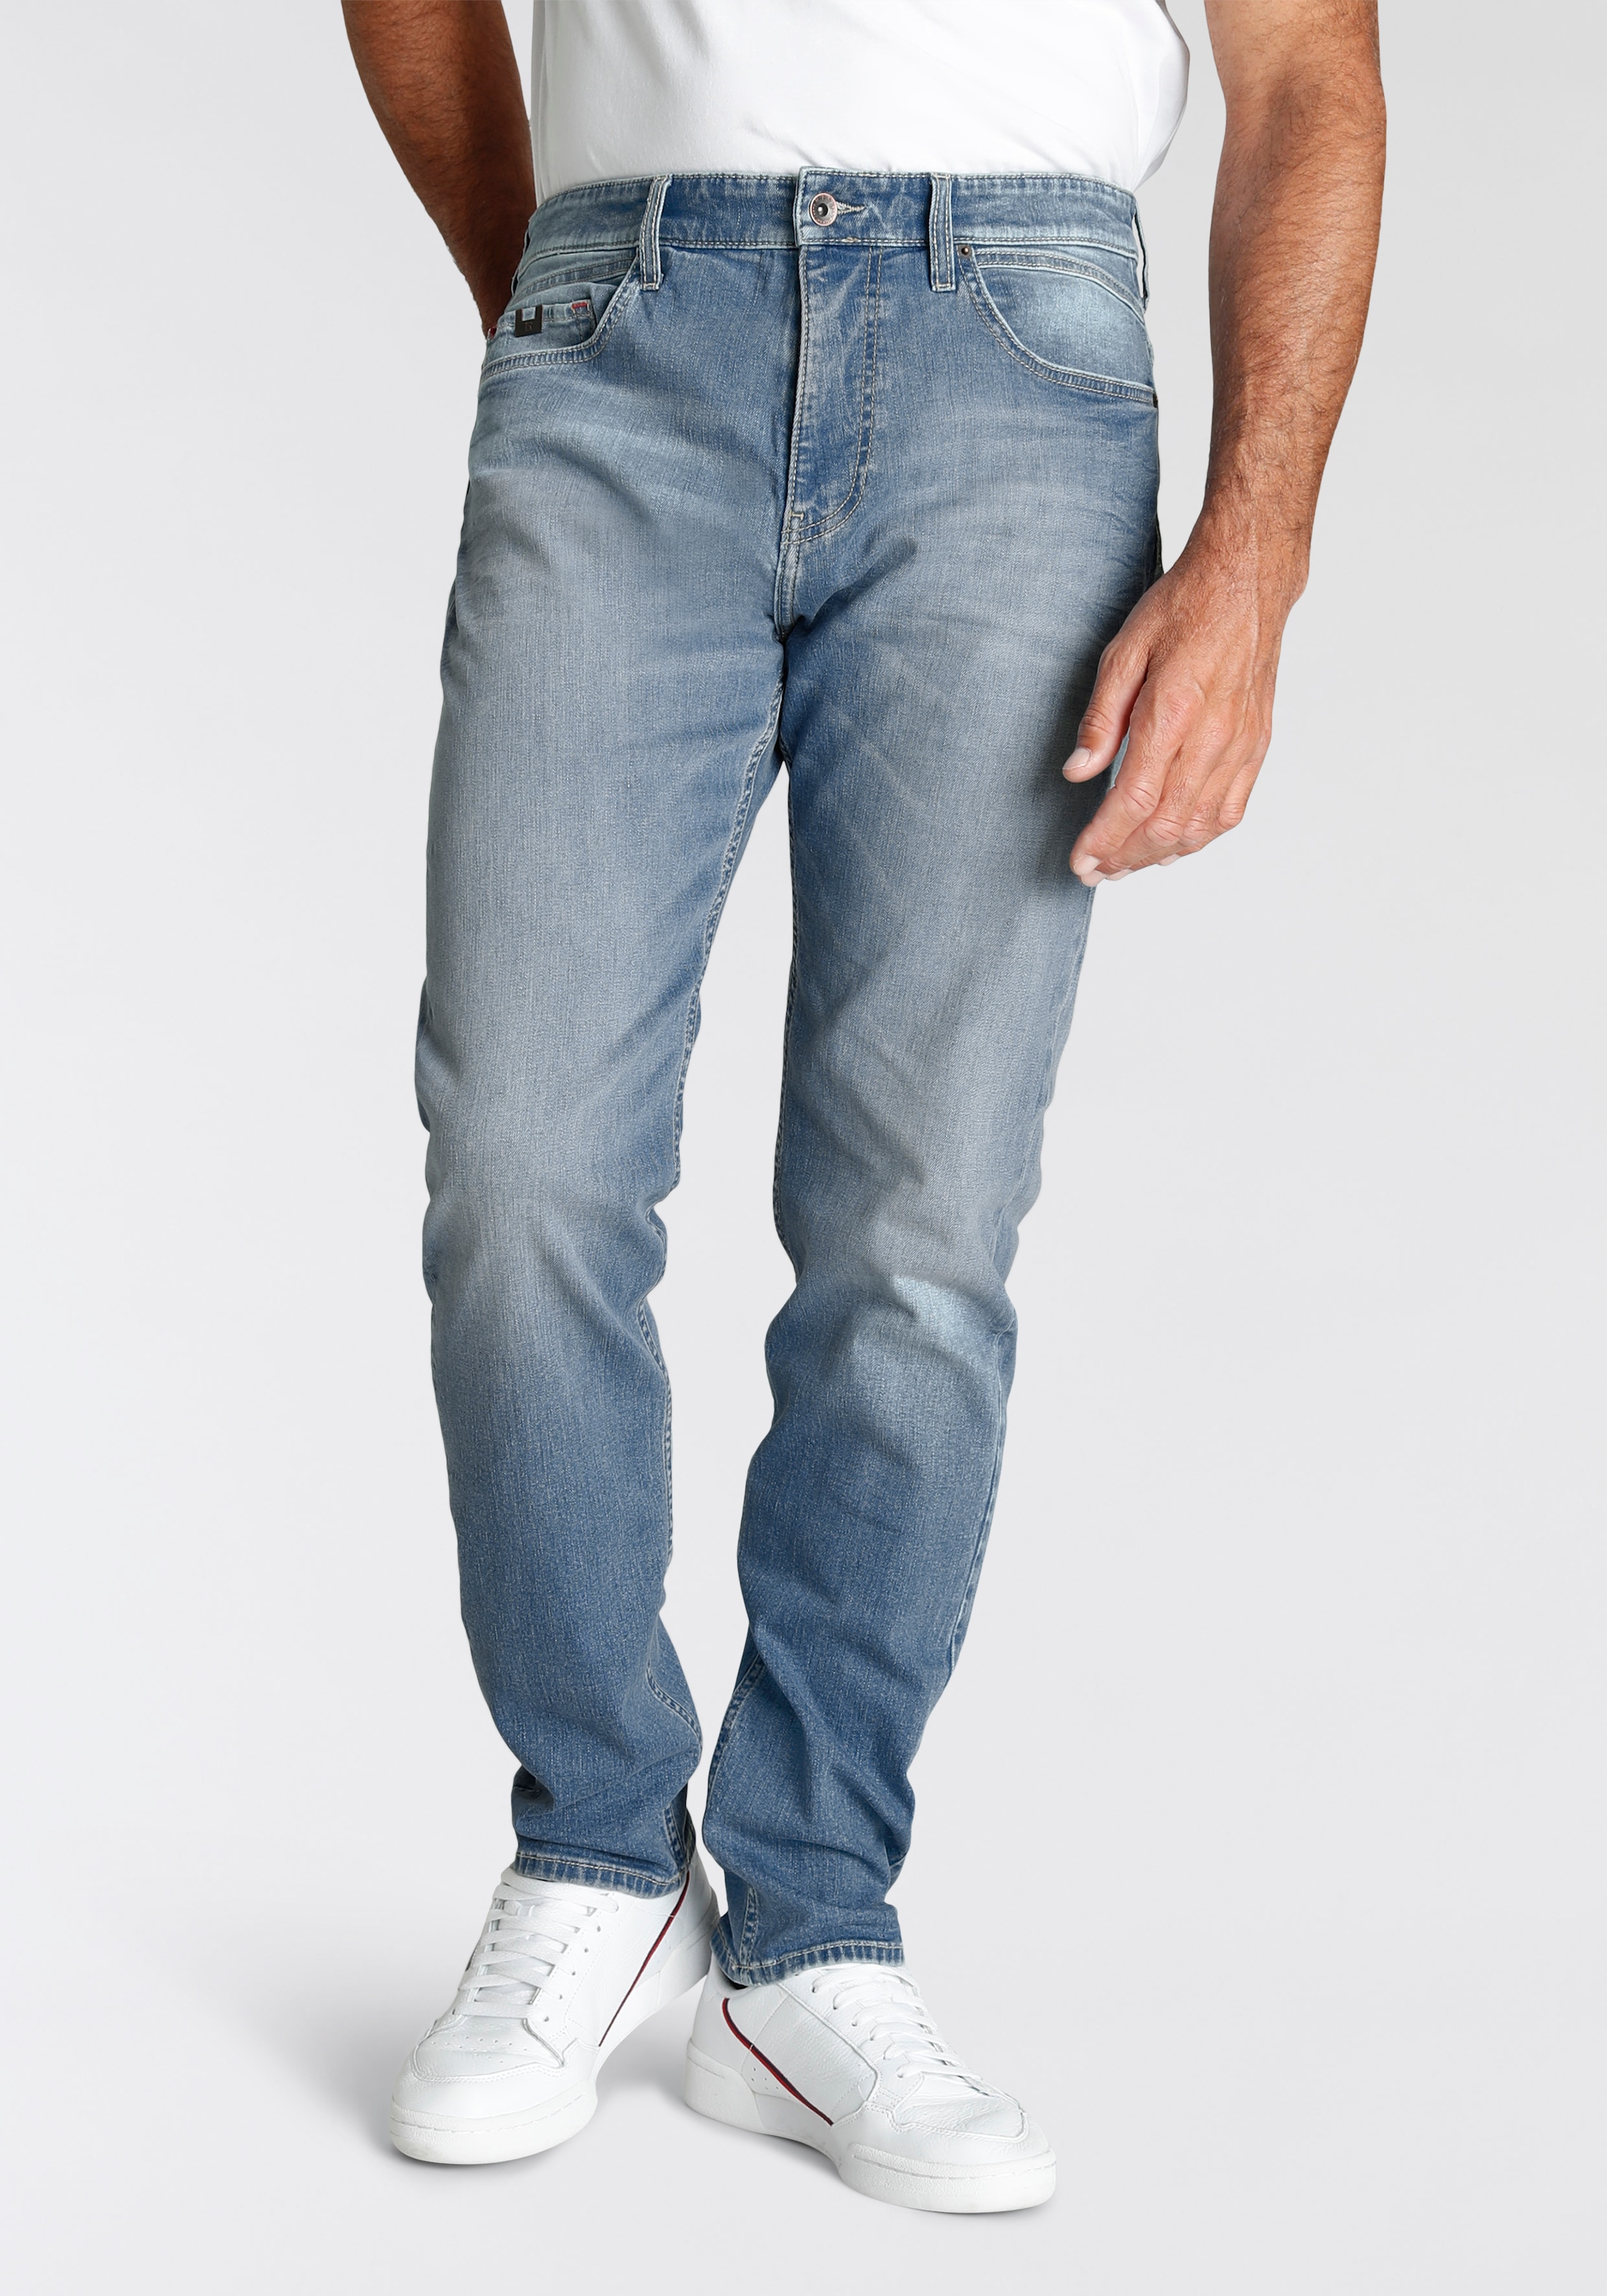 H.I.S Tapered-fit-Jeans "CIAN", Ökologische, wassersparende Produktion durch Ozon Wash